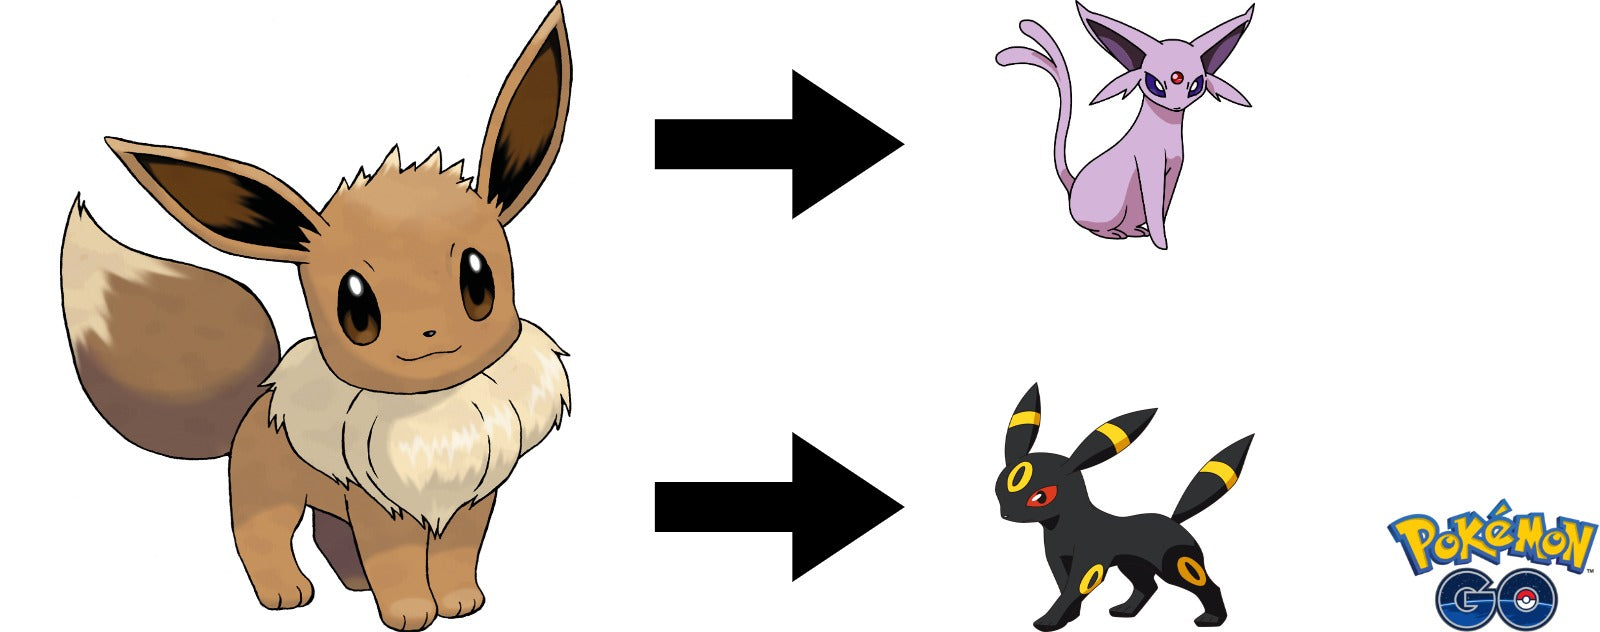 Pokemon GO Espeon Evolution Guide: How to Evolve Espeon